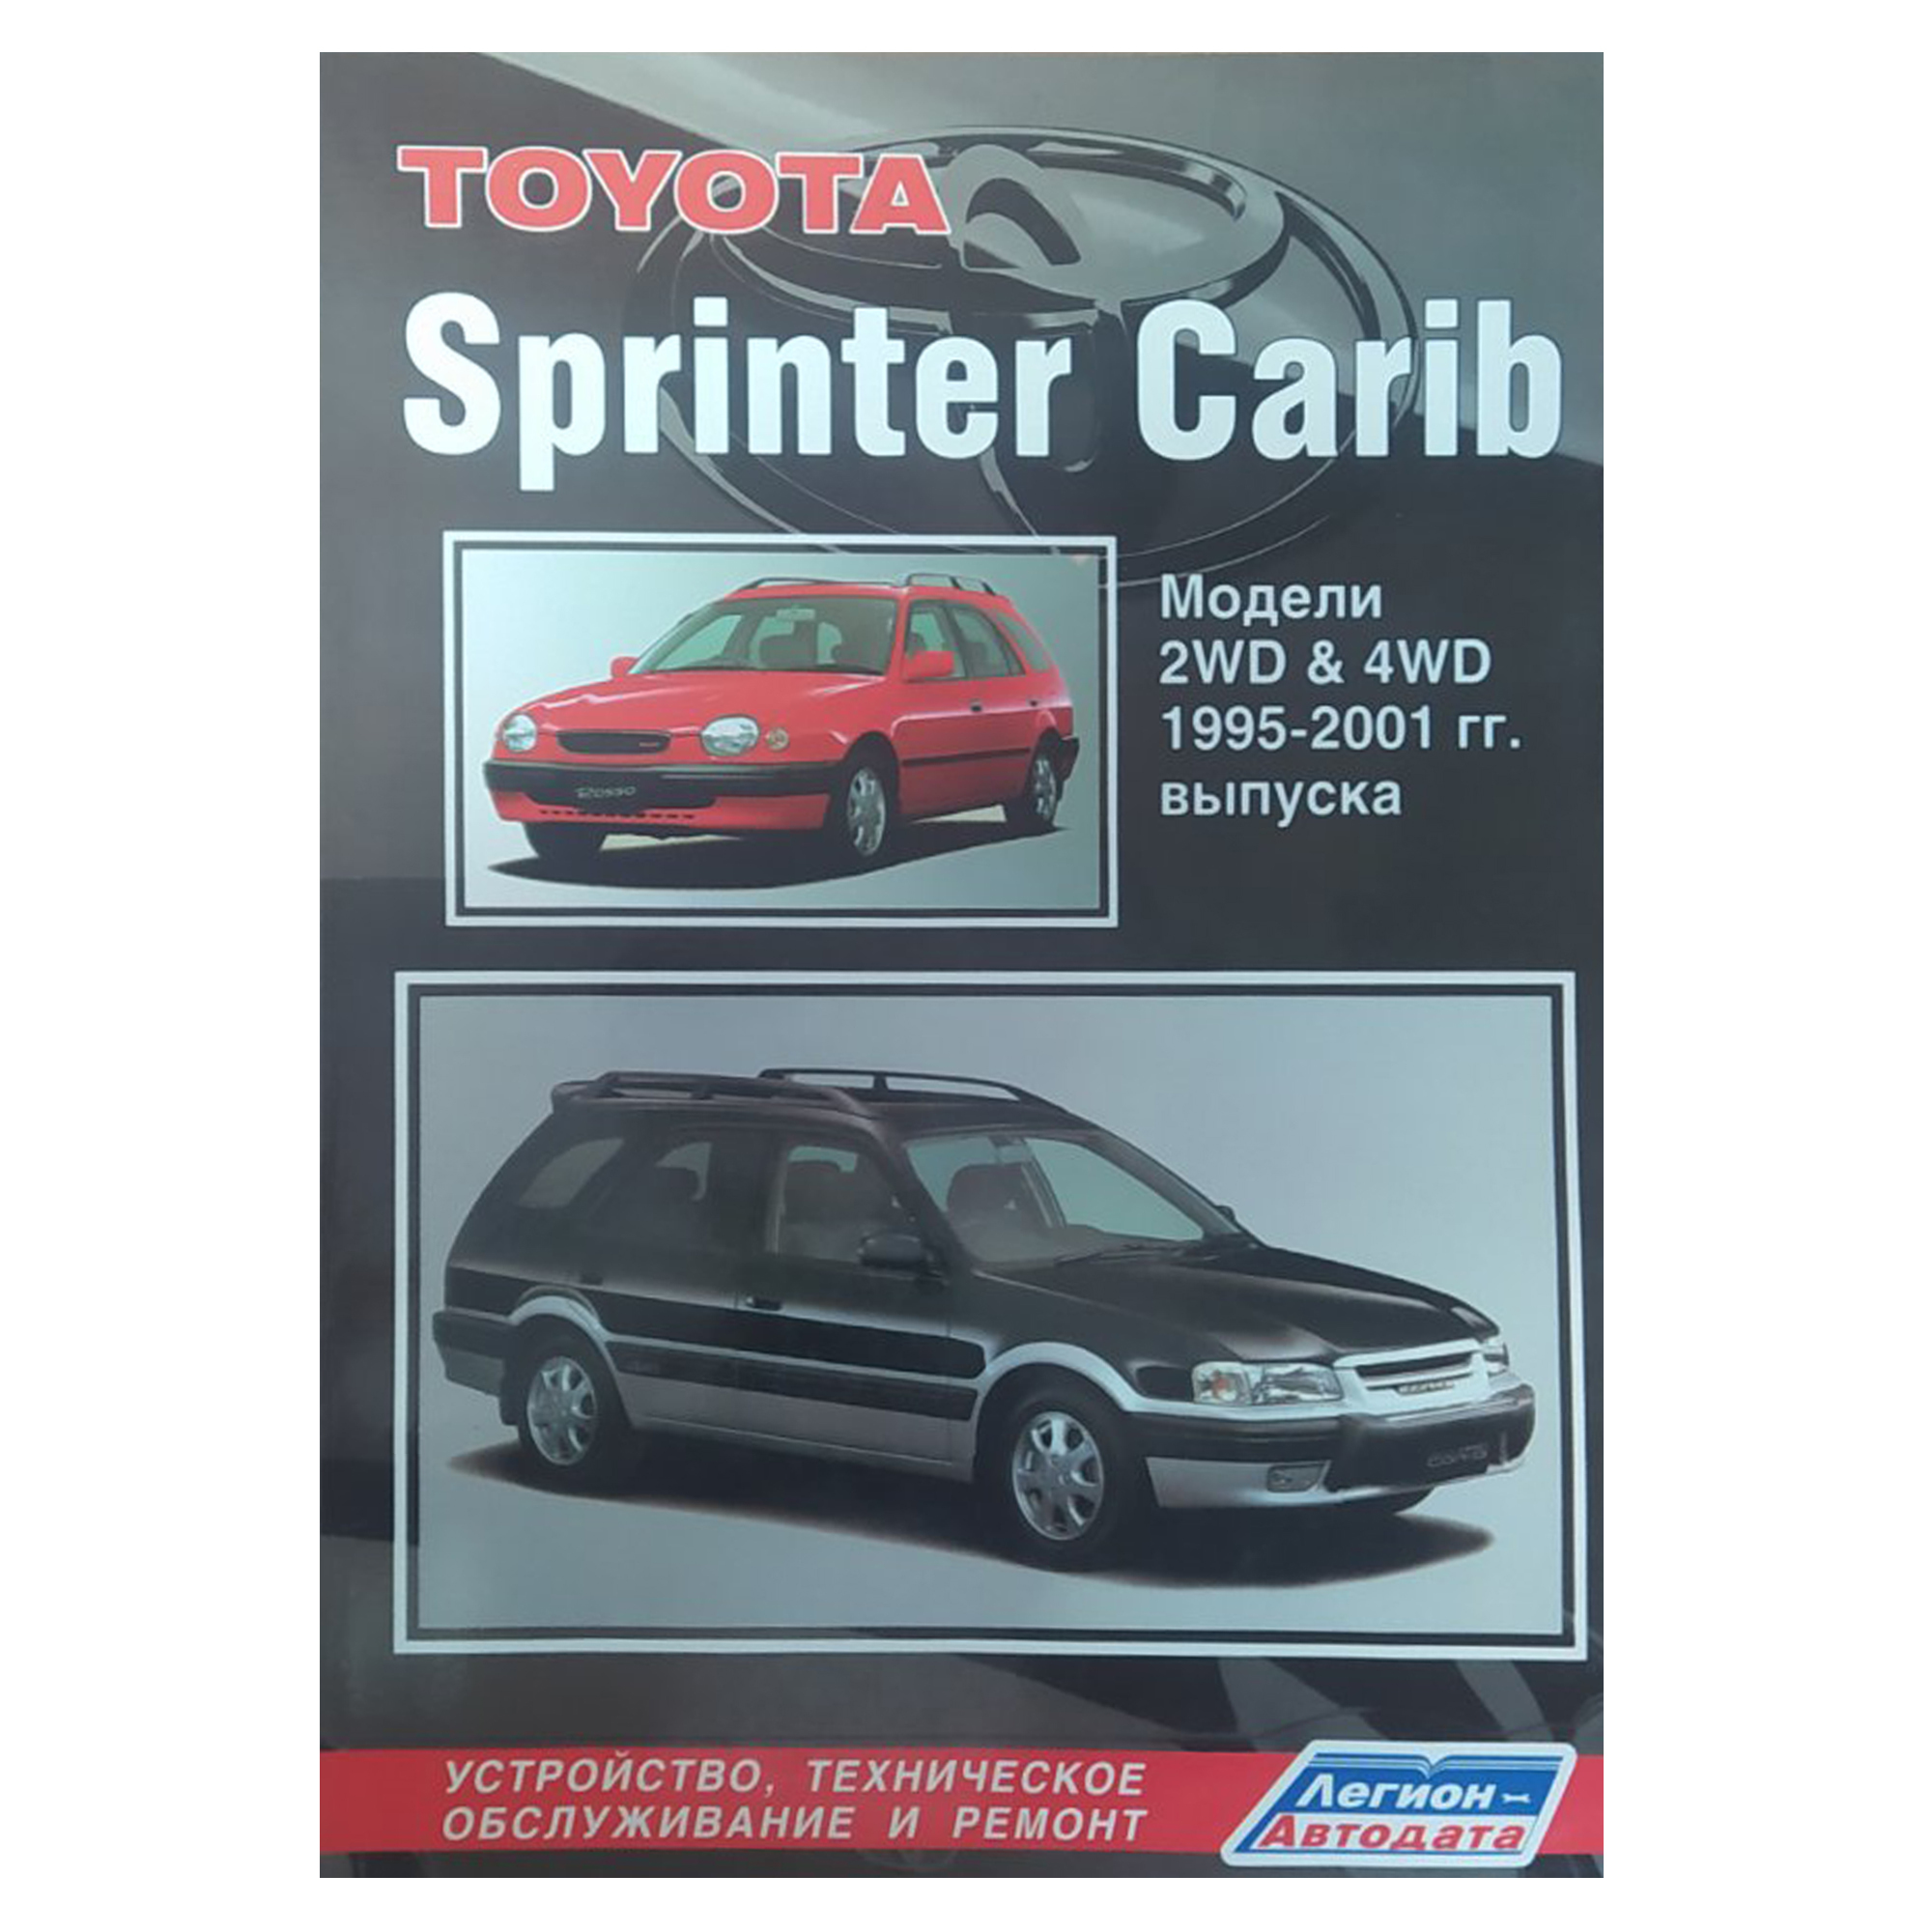 Ремонт АКПП: DSG, S-Tronic, Powershift Toyota Sprinter Carib в Санкт-Петербурге в СТО Motul Garage